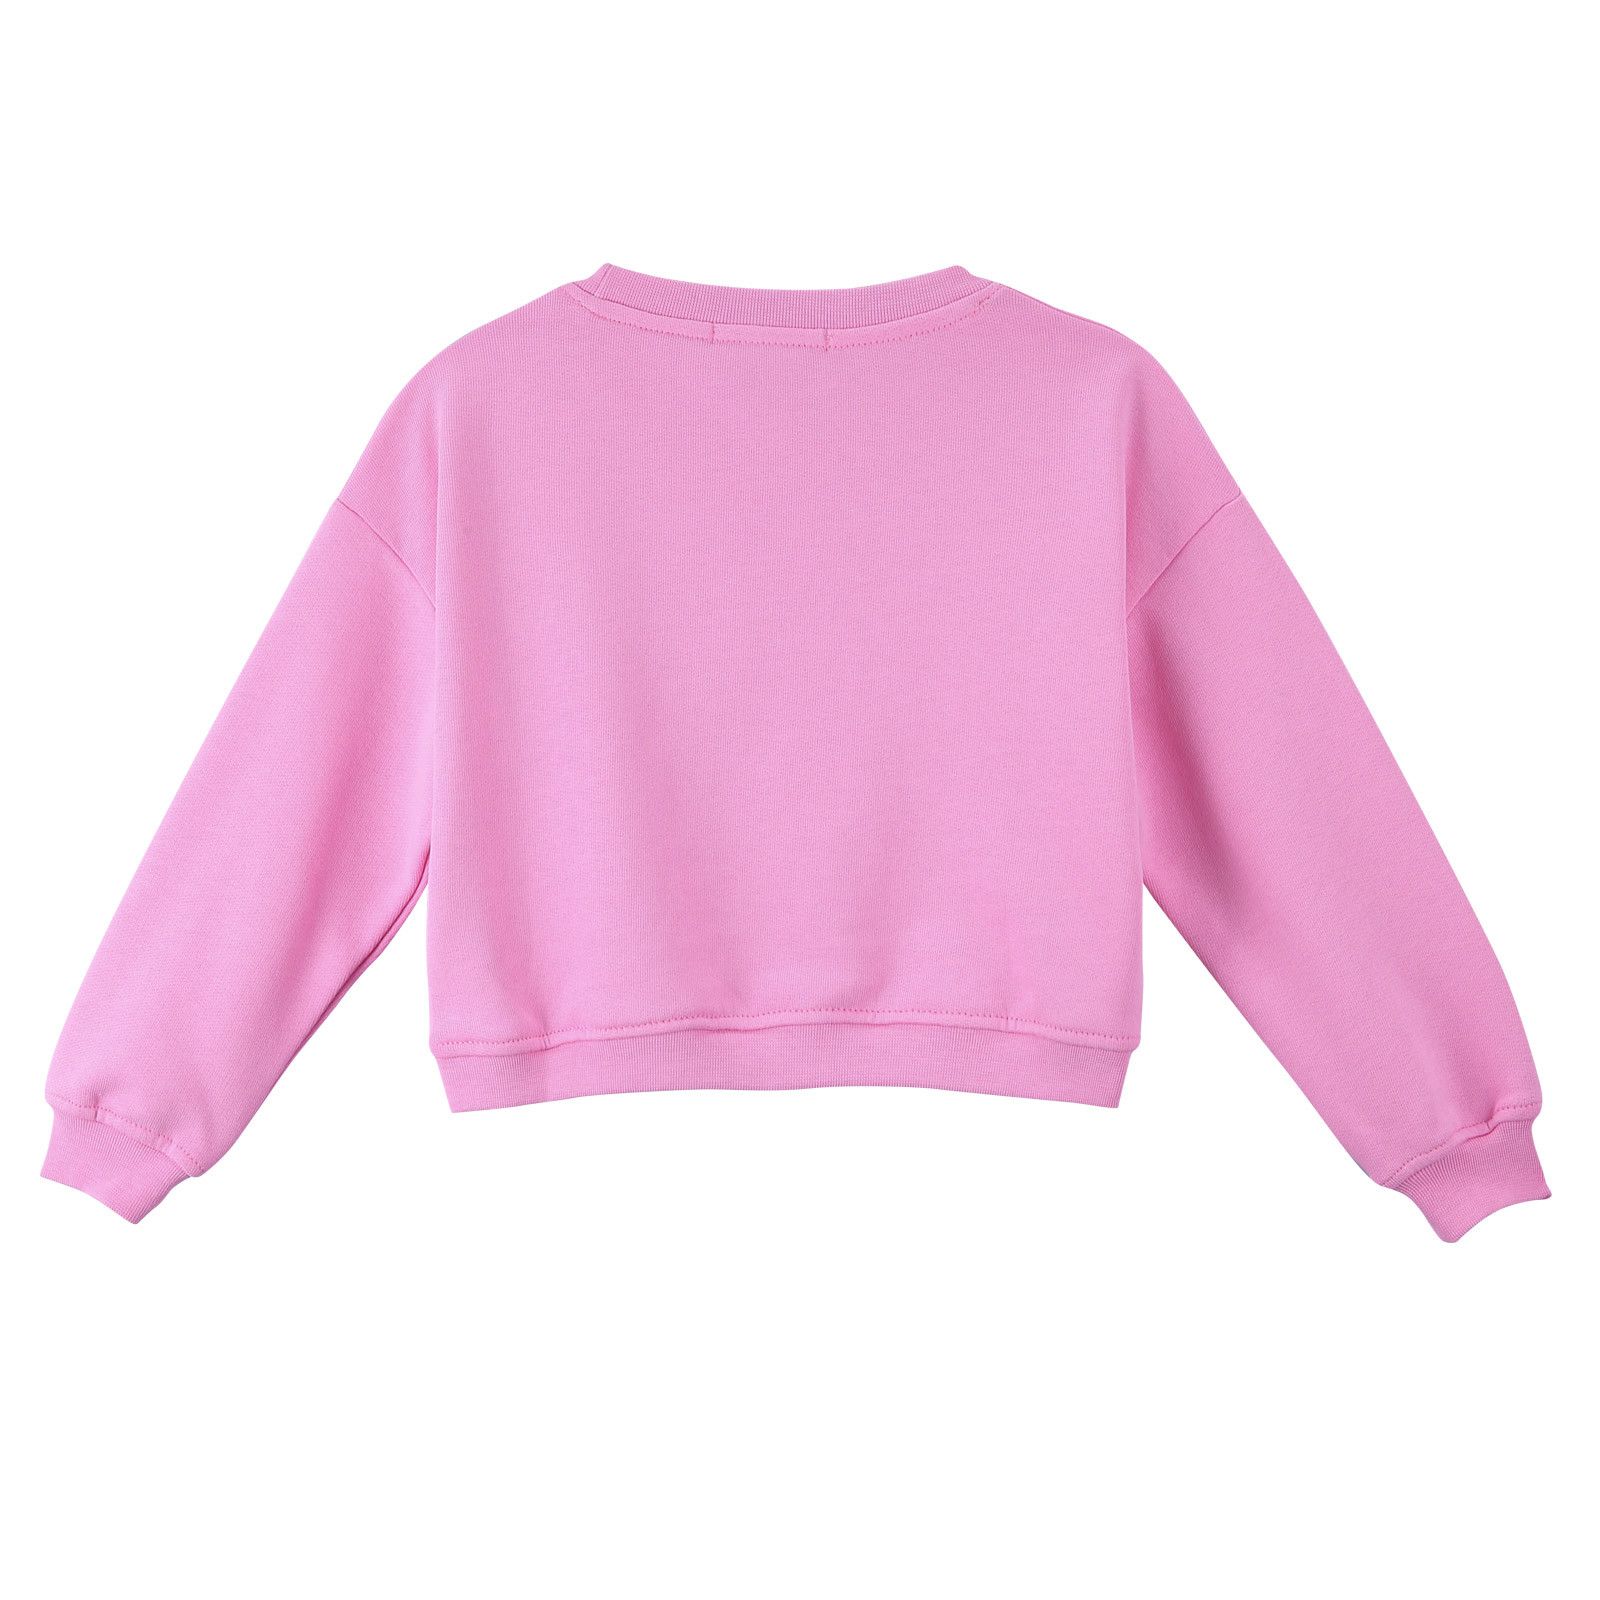 Girls Pink Cotton Sweater With Brand Name Logo - CÉMAROSE | Children's Fashion Store - 2